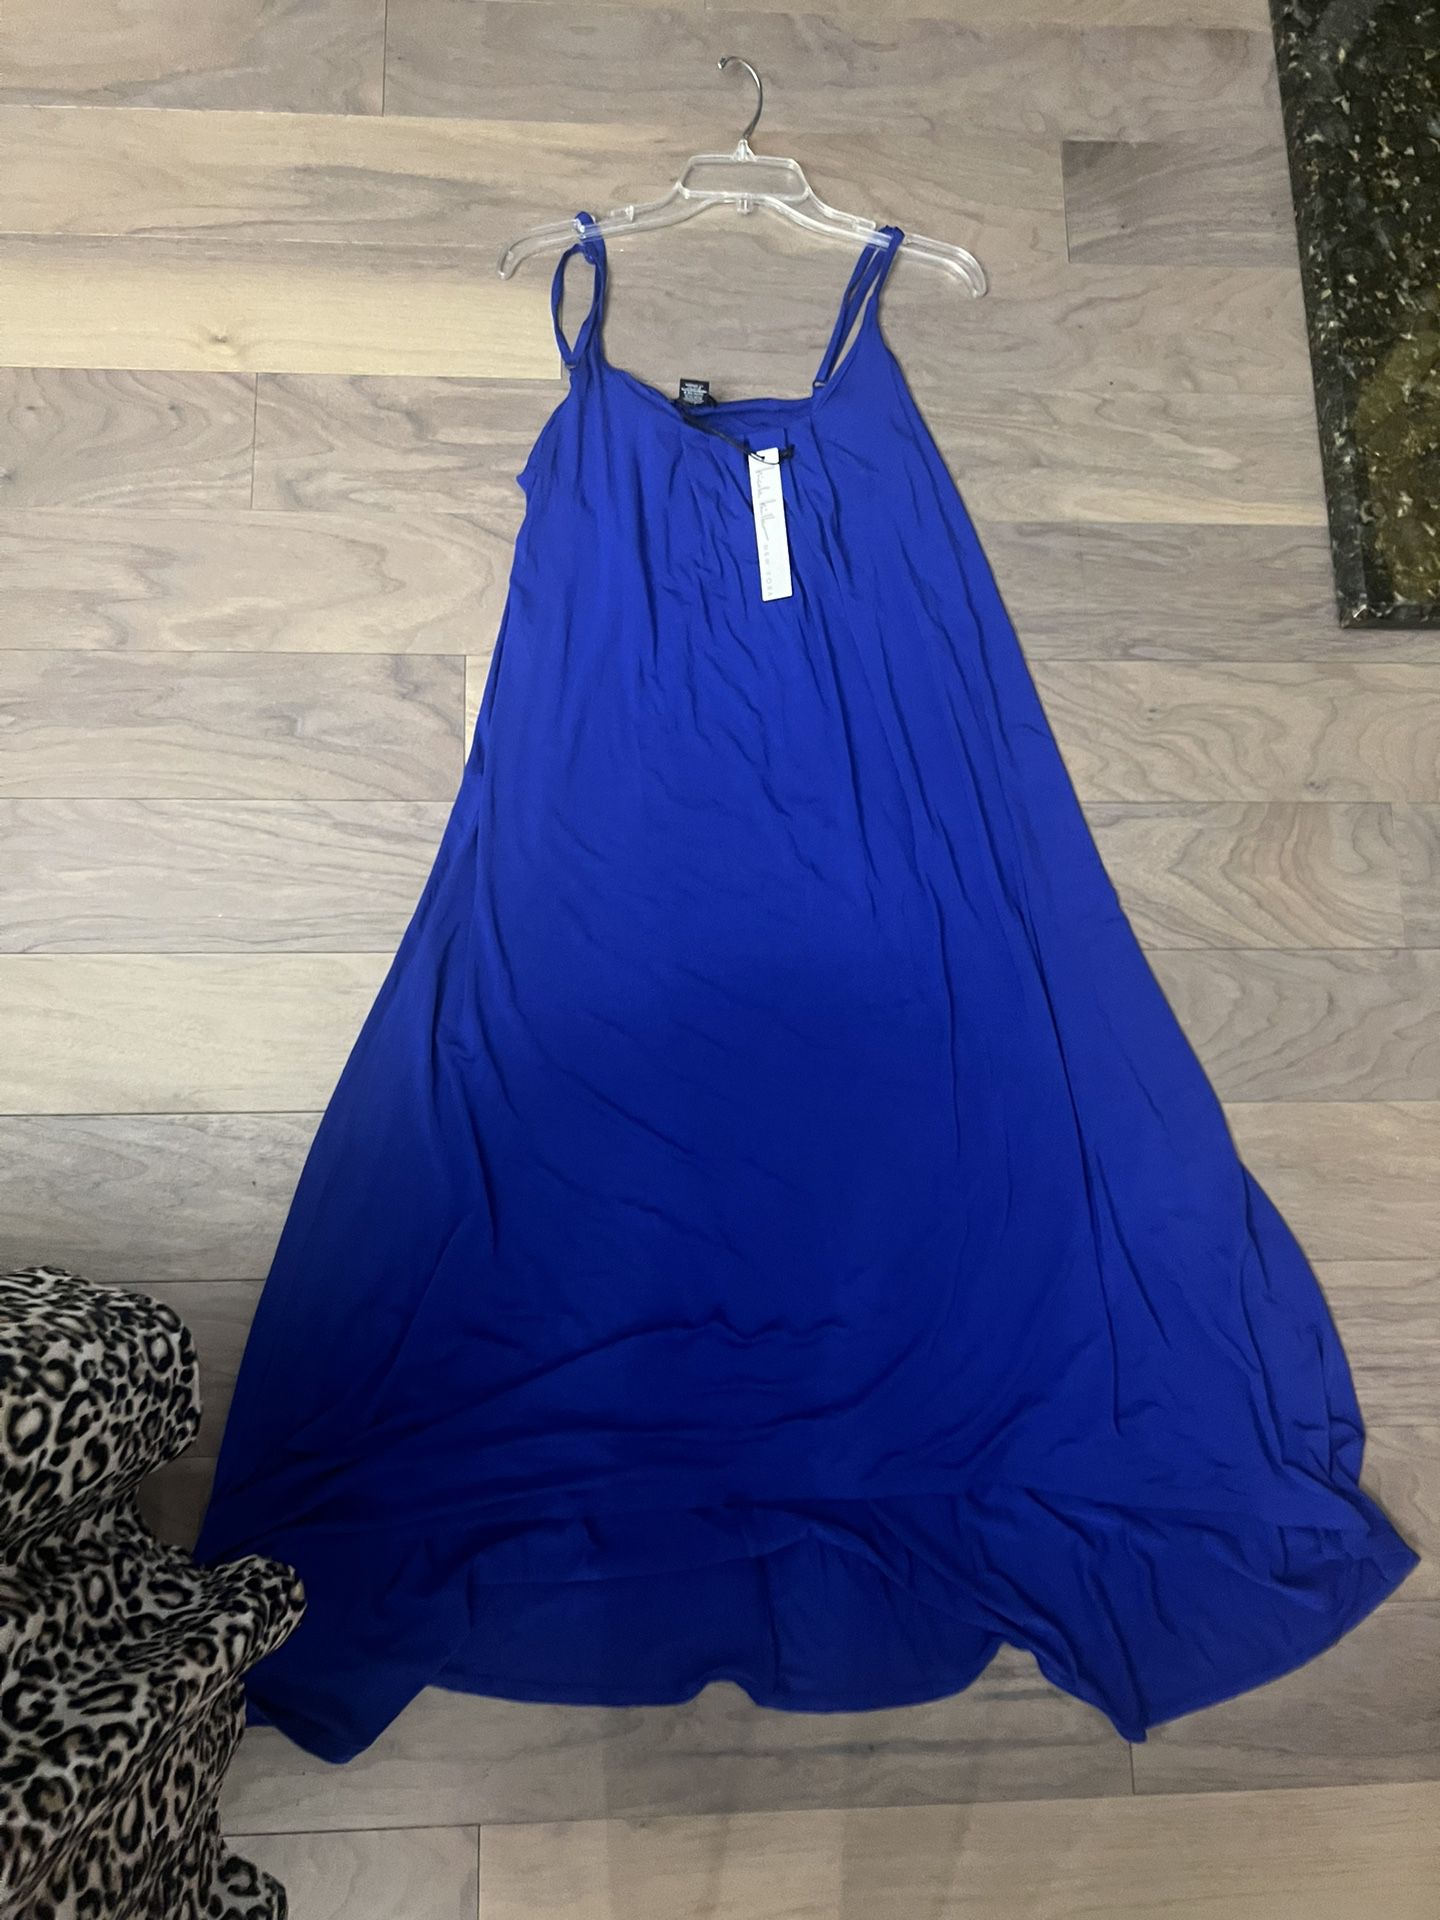 New Nicole Miller Dress NWT Size XL Blue